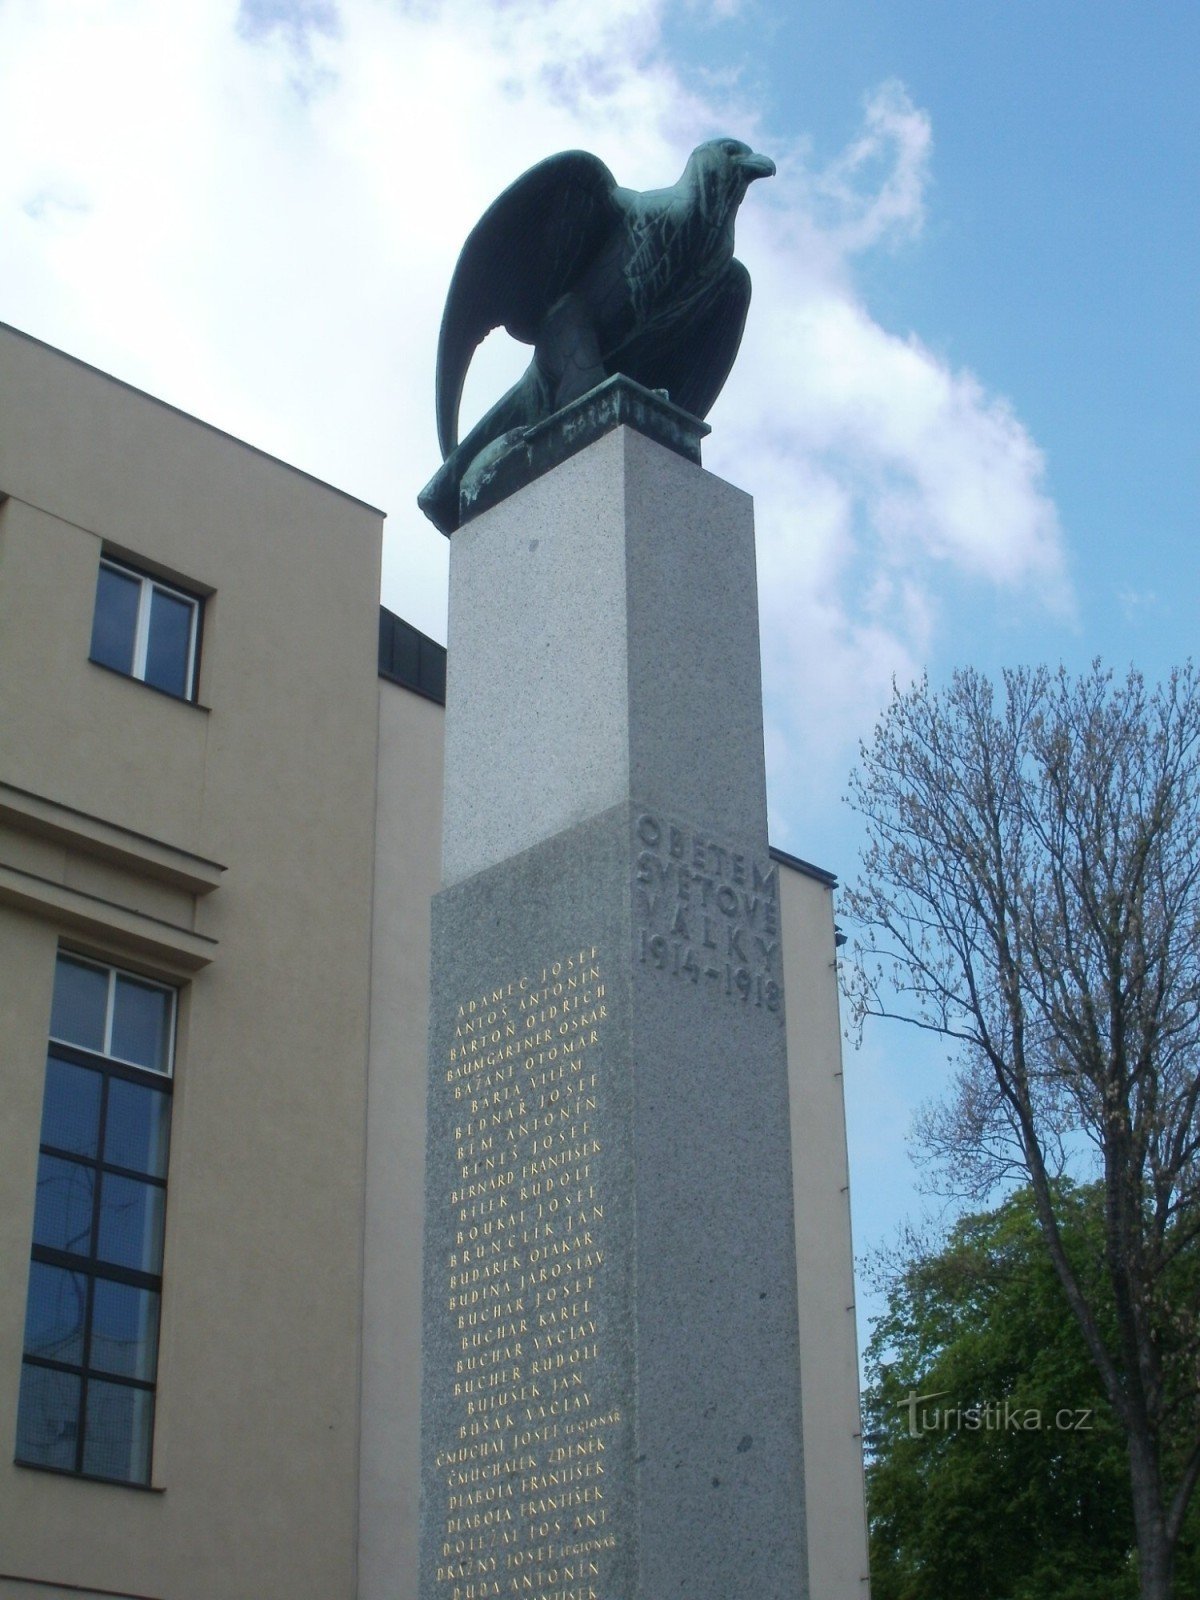 Jilemnice - spomenik žrtvam vojn